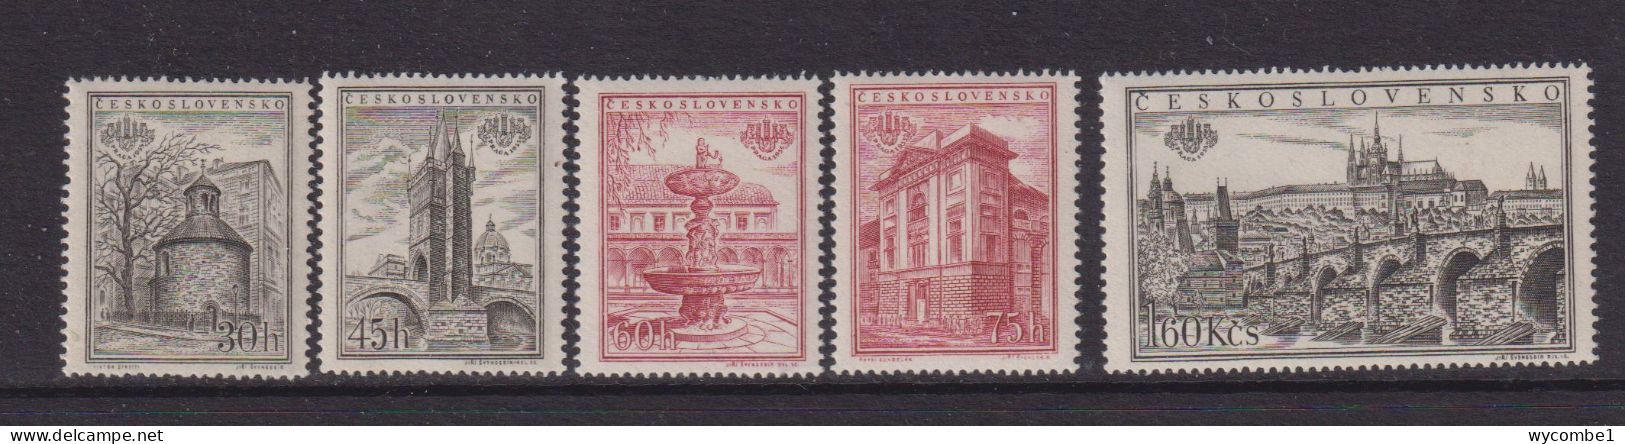 CZECHOSLOVAKIA  - 1955  Philatelic Exhibition Set  Never Hinged Mint - Ungebraucht